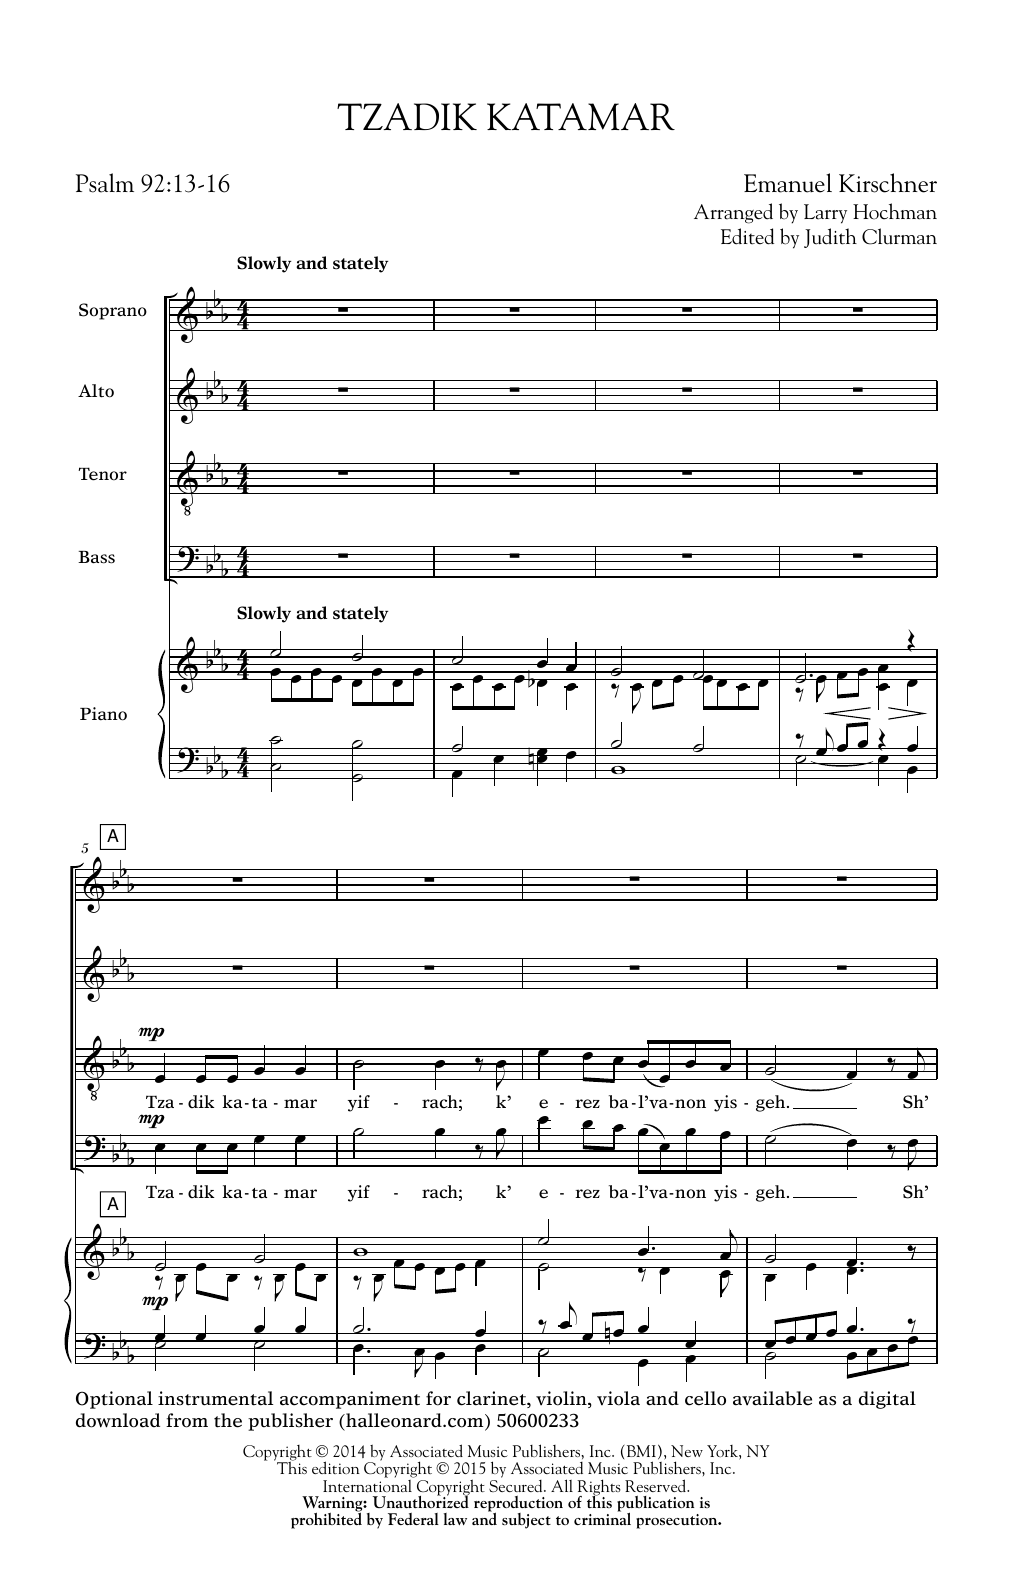 Emanuel Kirschner Tzadik Katamar Yifrach (Arr. Larry Hochman) Sheet Music Notes & Chords for SATB - Download or Print PDF